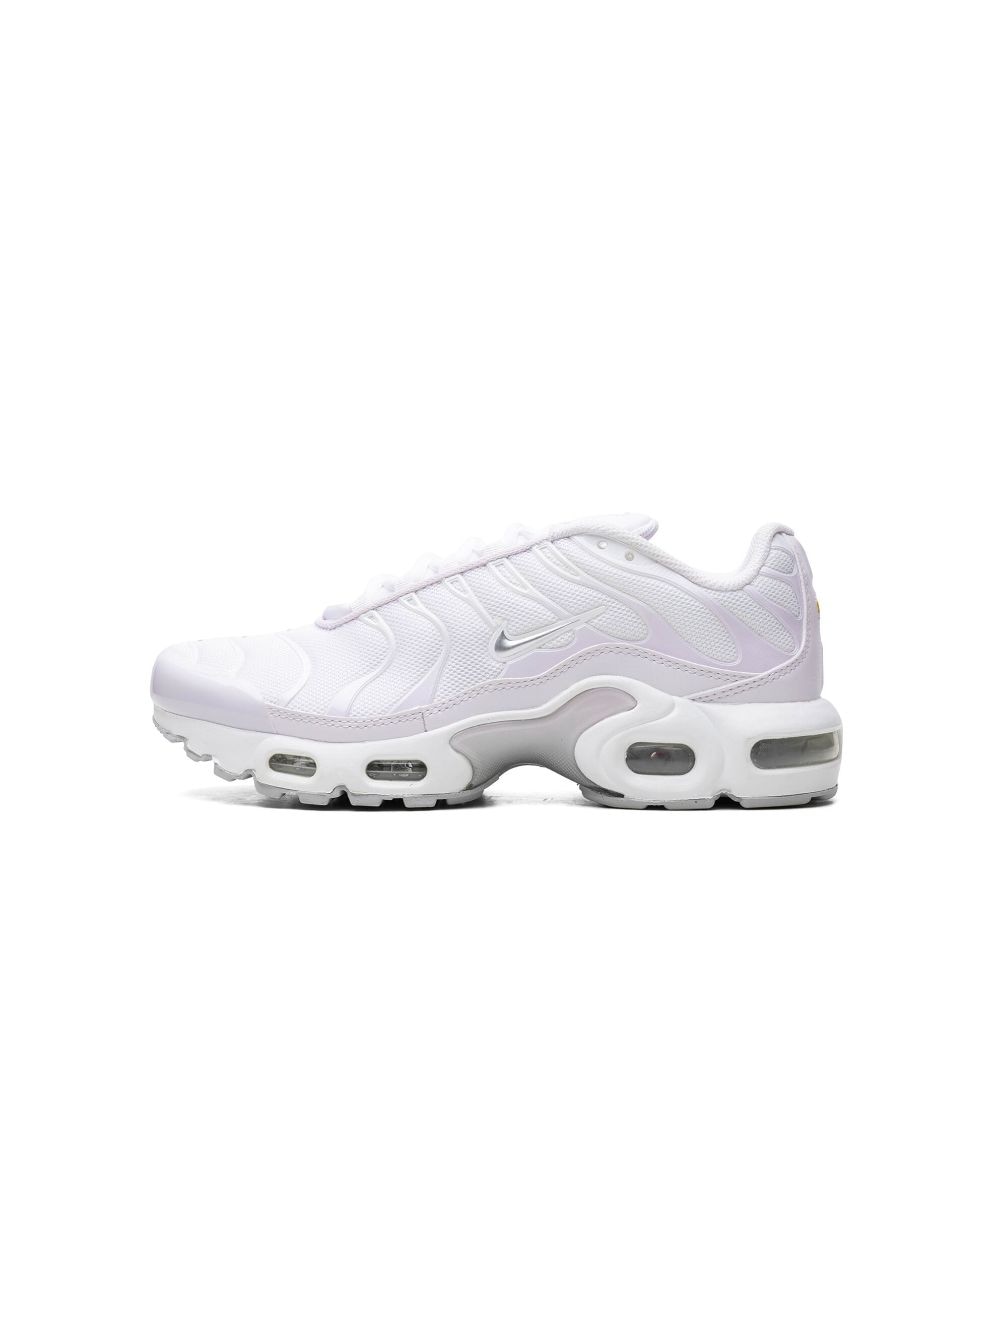 Shop Nike Air Max Plus "white/light Violet" Sneakers